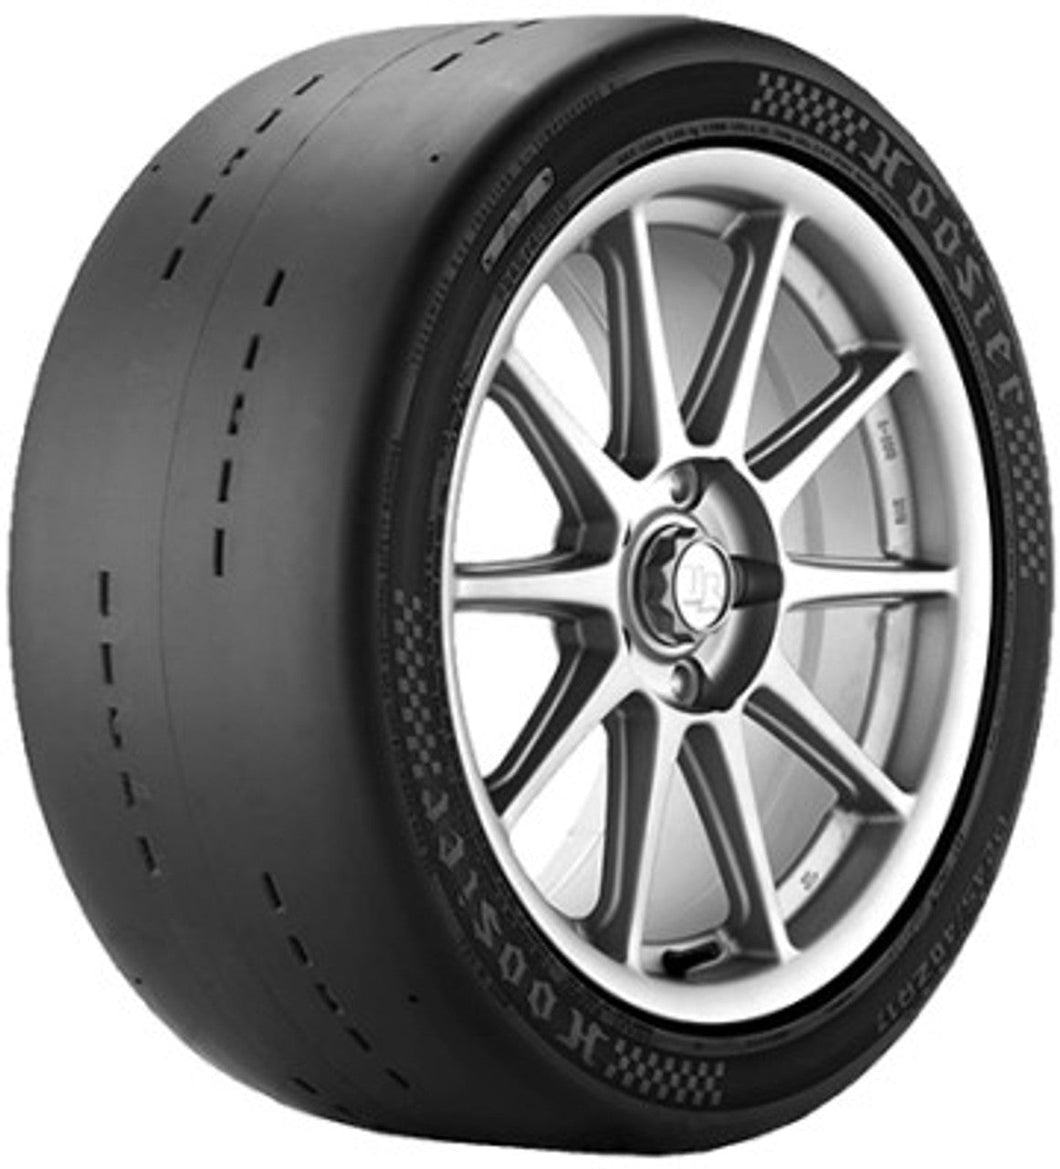 245/35 ZR18 Hoosier Tire Slick D.O.T Neumático